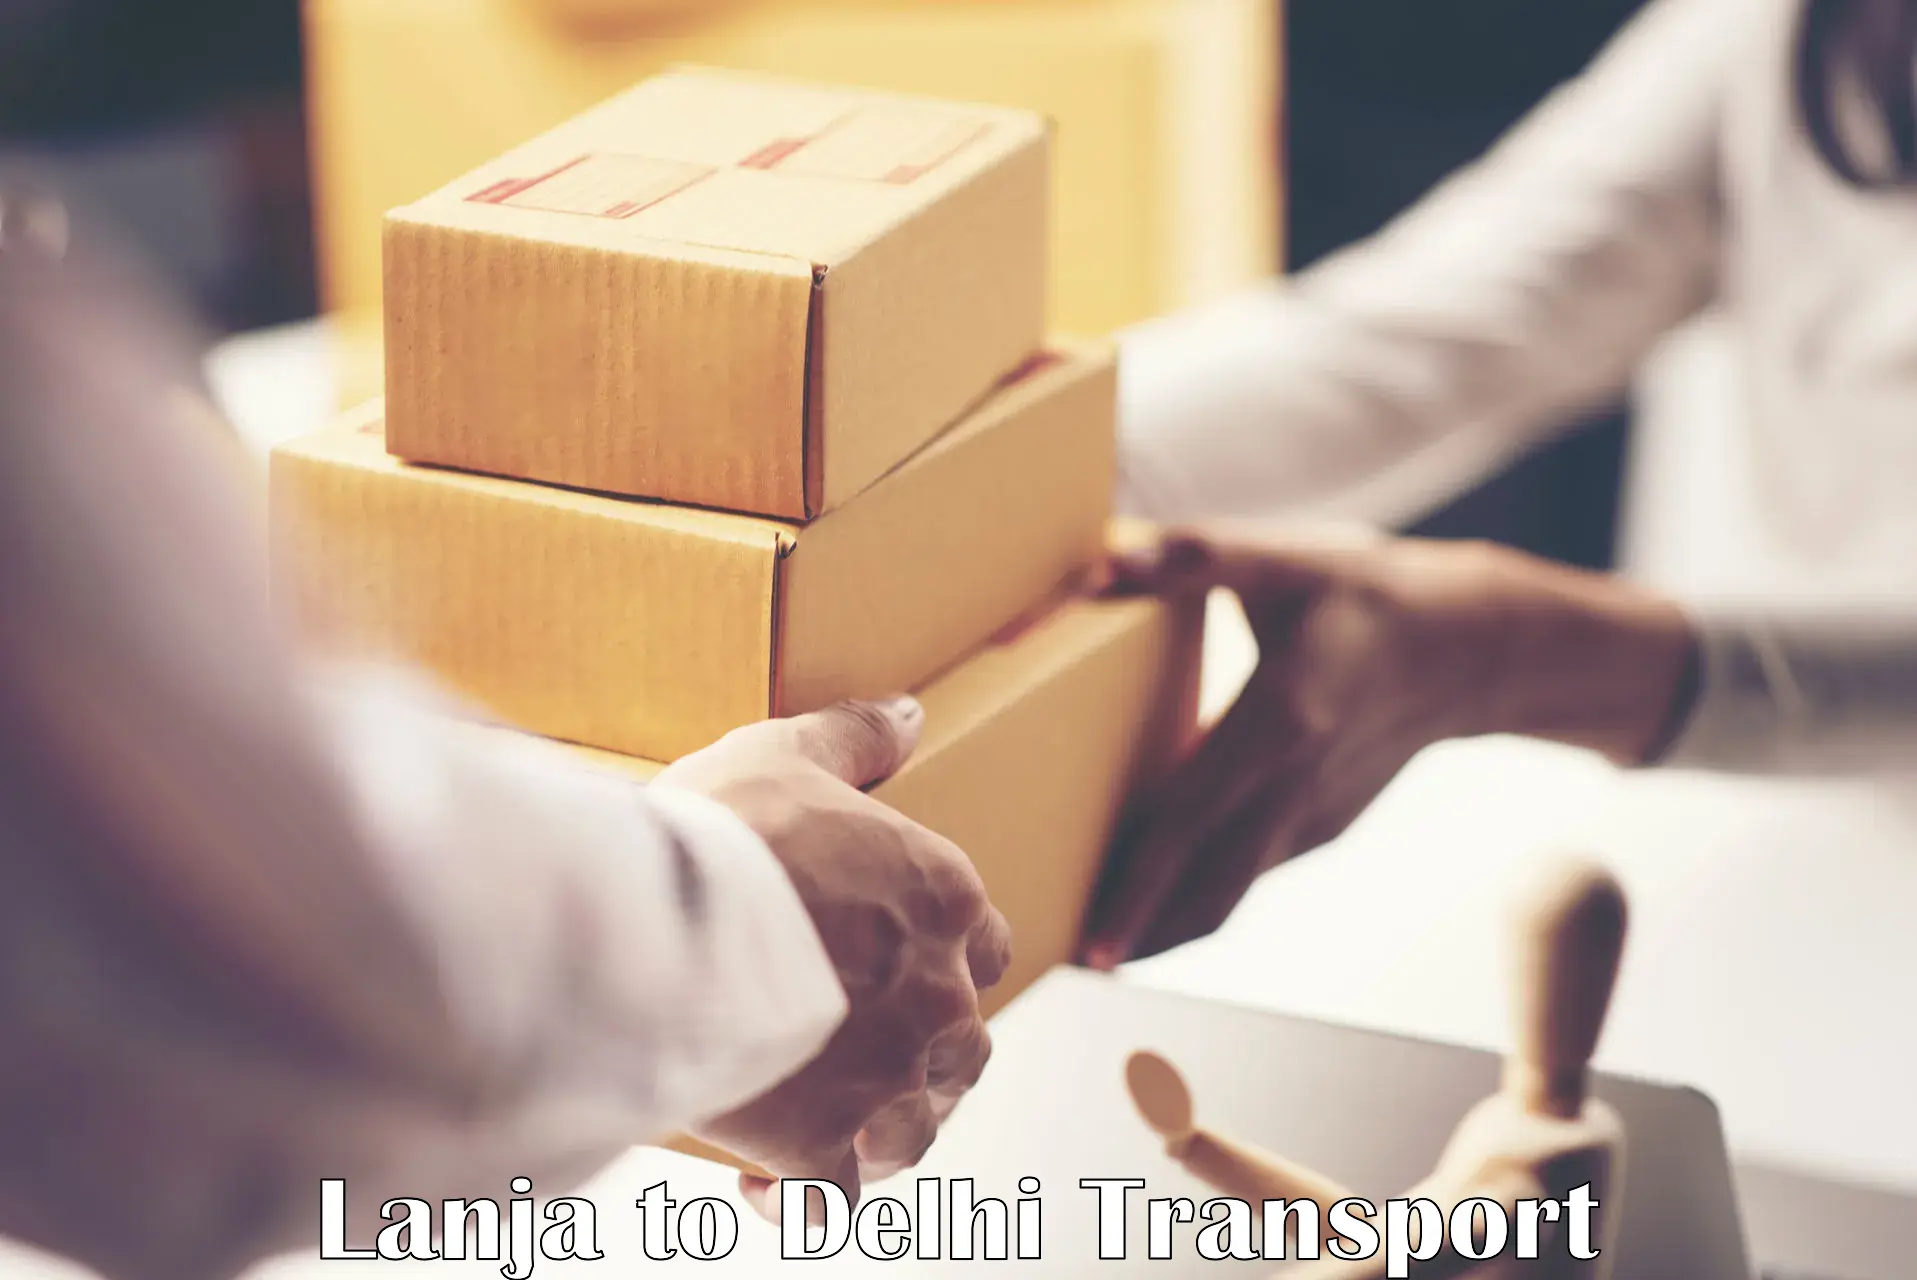 Commercial transport service Lanja to Delhi